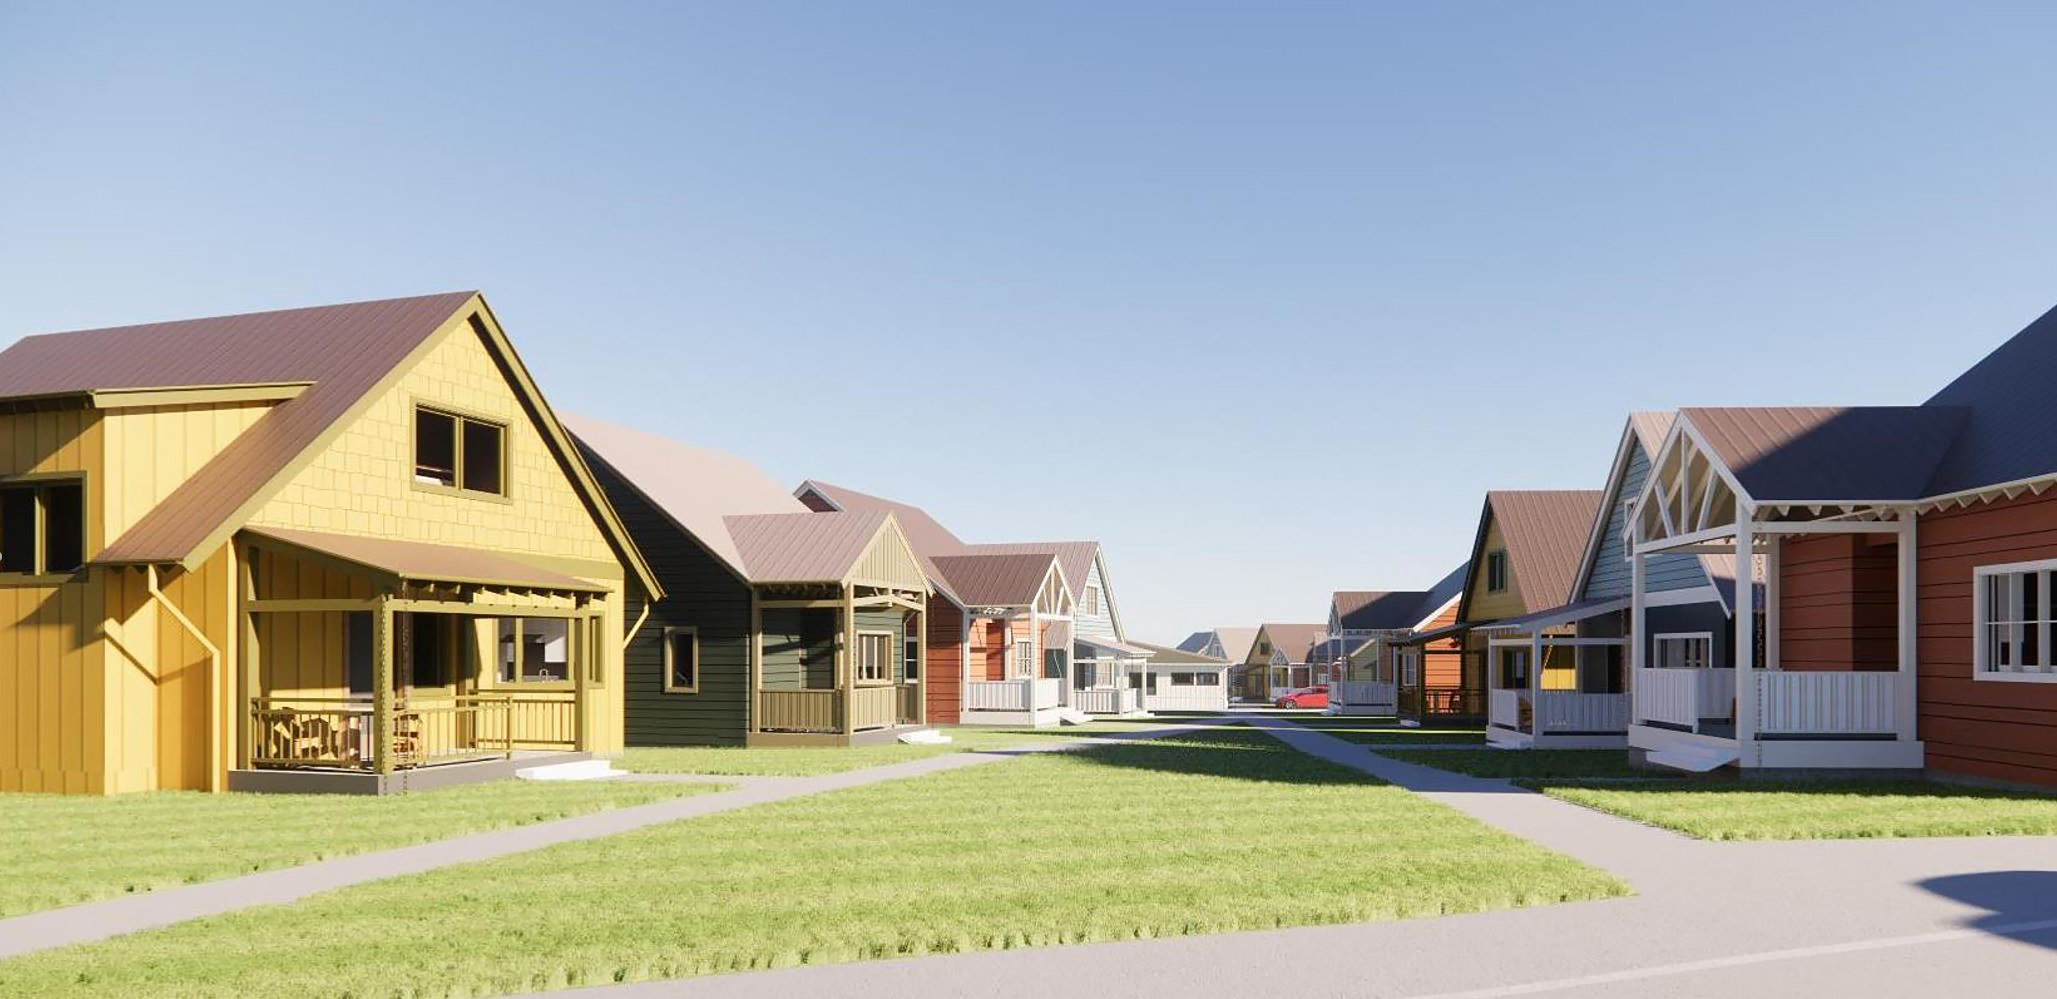 Sunnyside cohousing community rendering homes